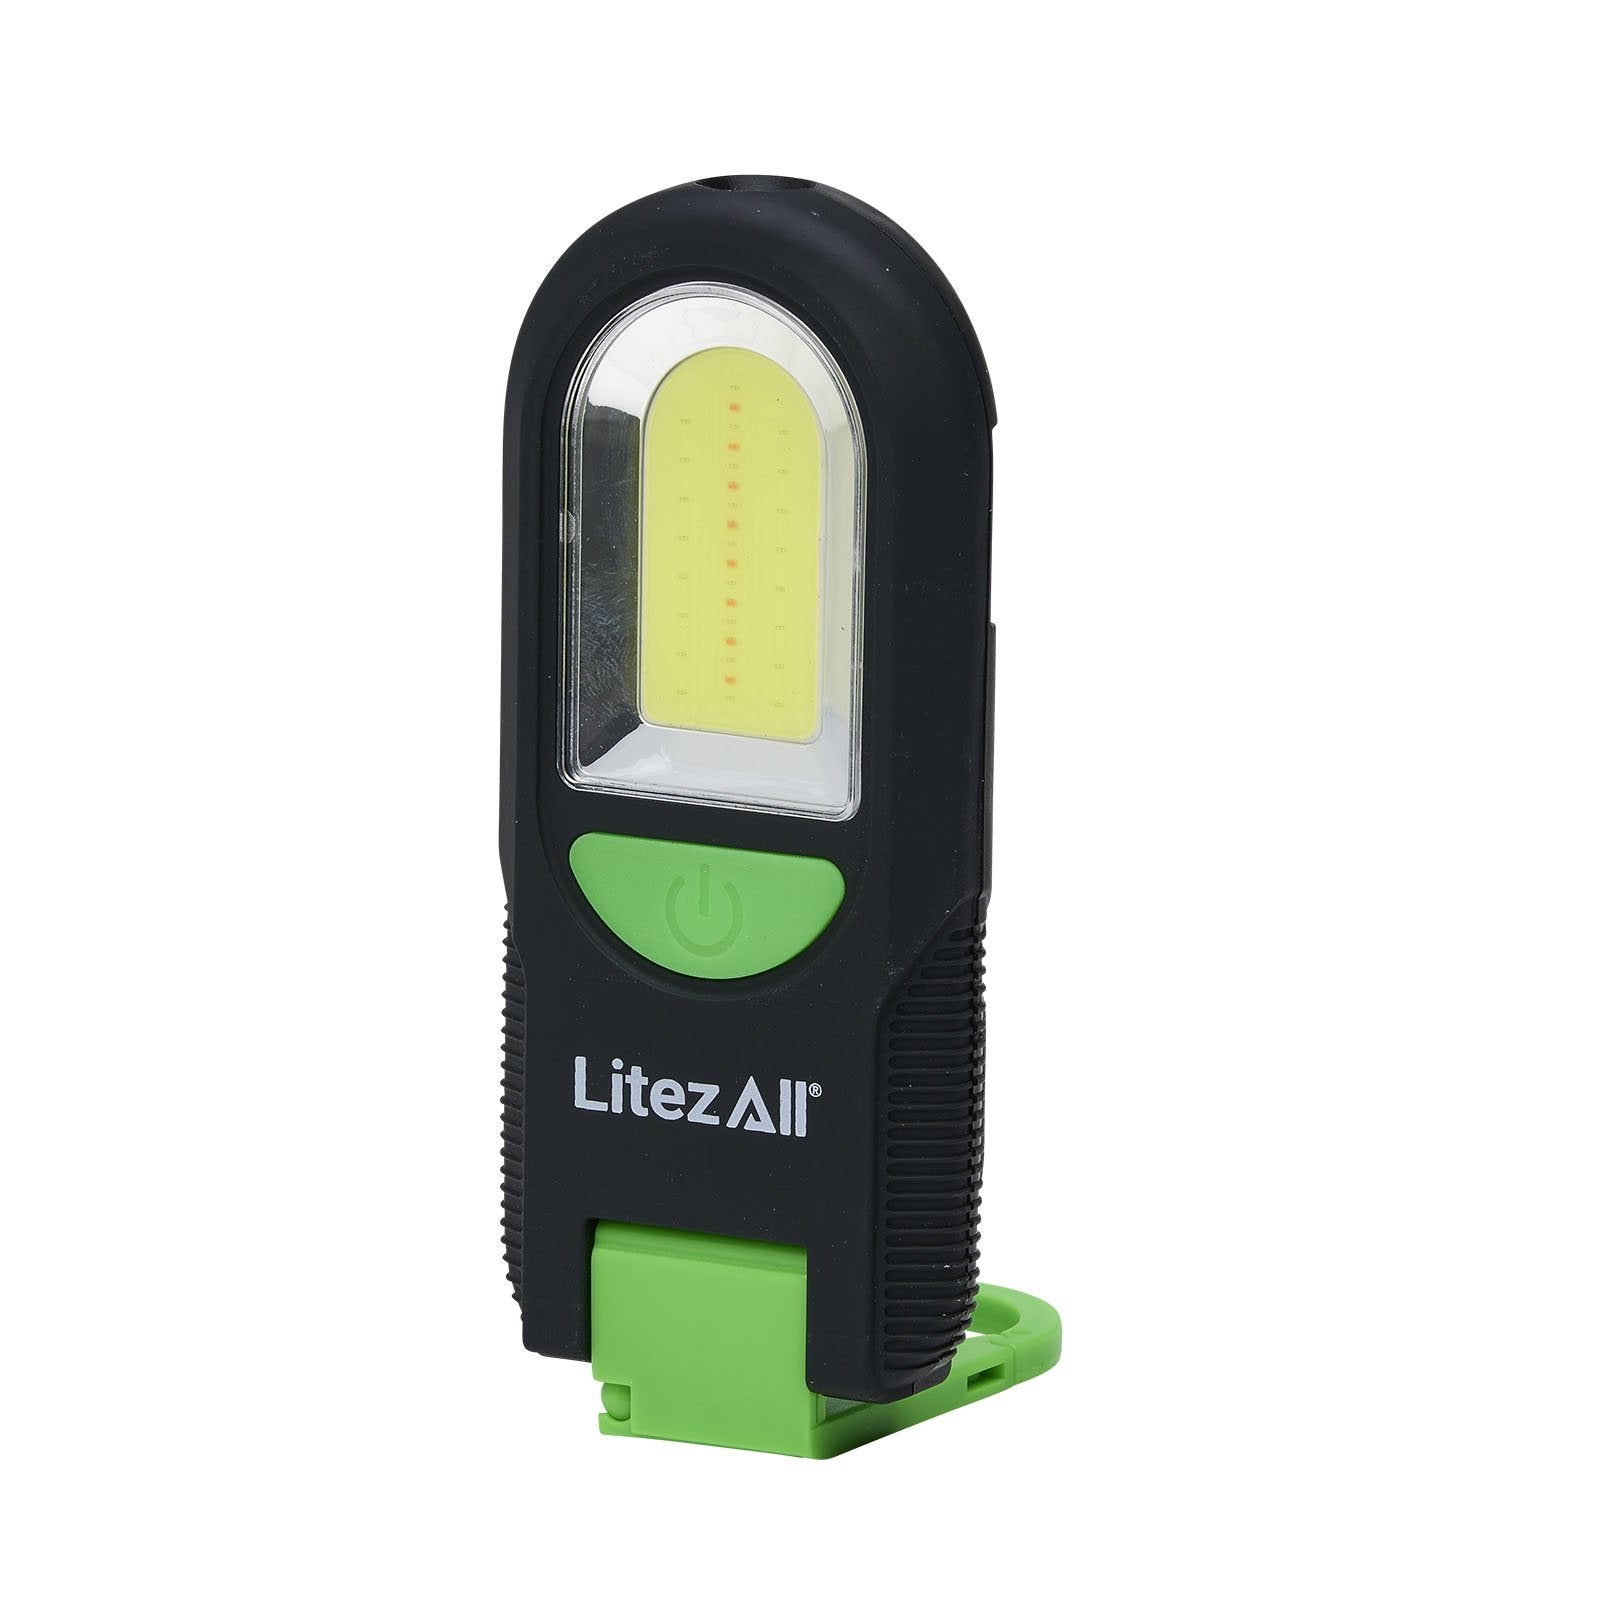 LitezAll Rechargeable Work Light and Emergency Light - LitezAll - Work Lights - 51